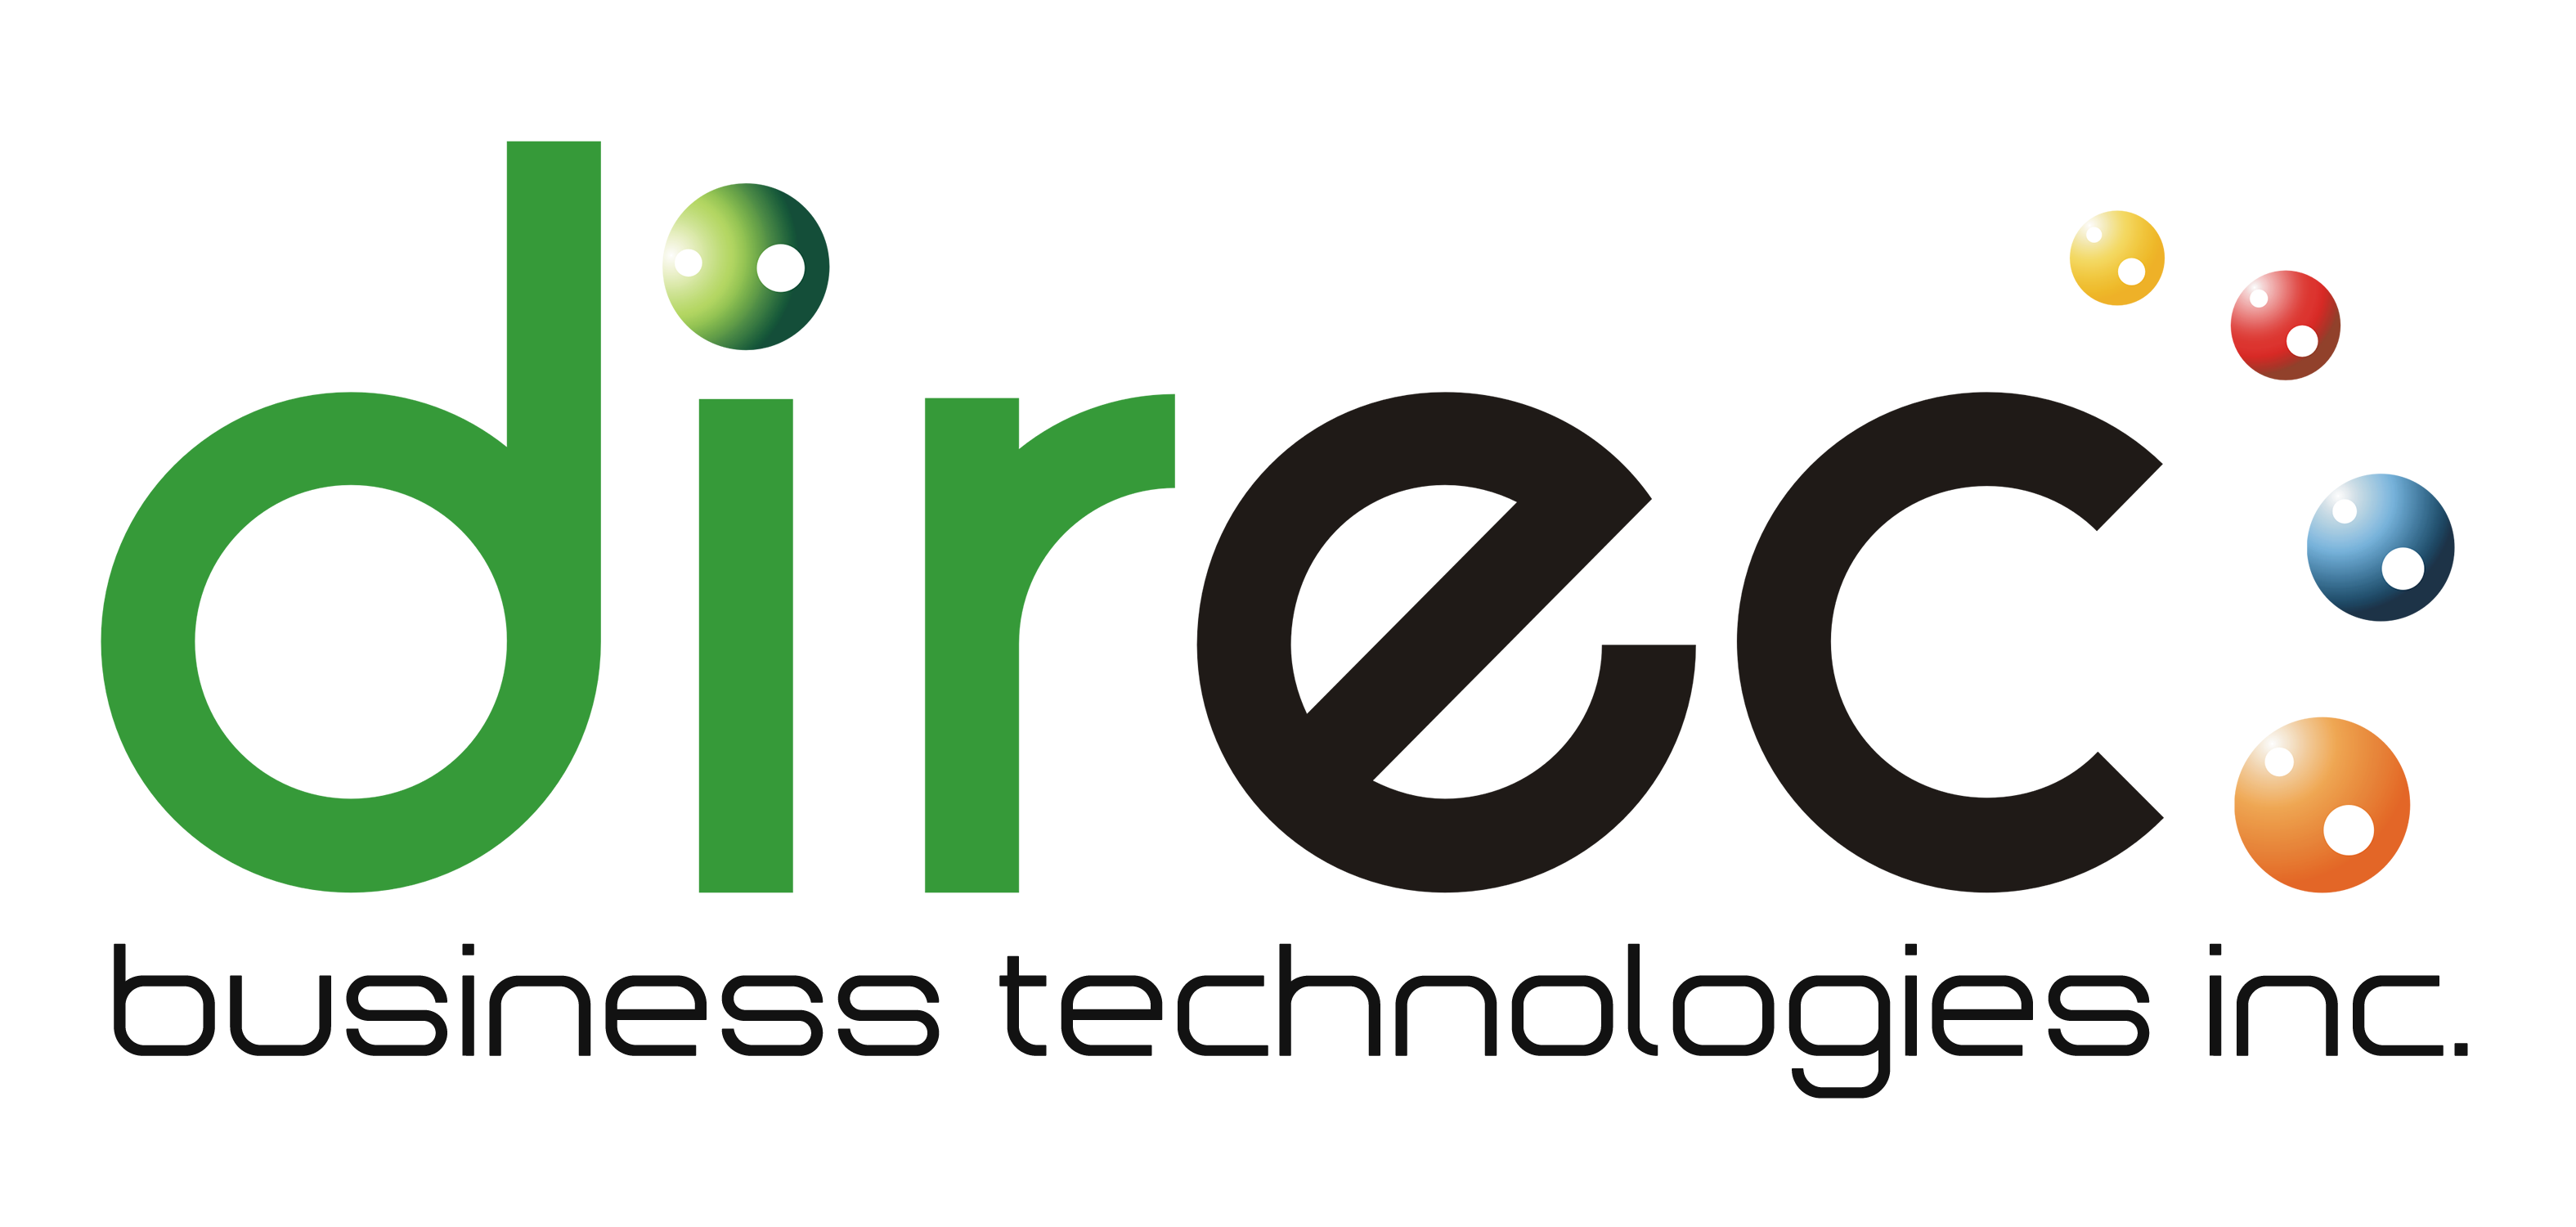 Direc Business Technologies Inc.